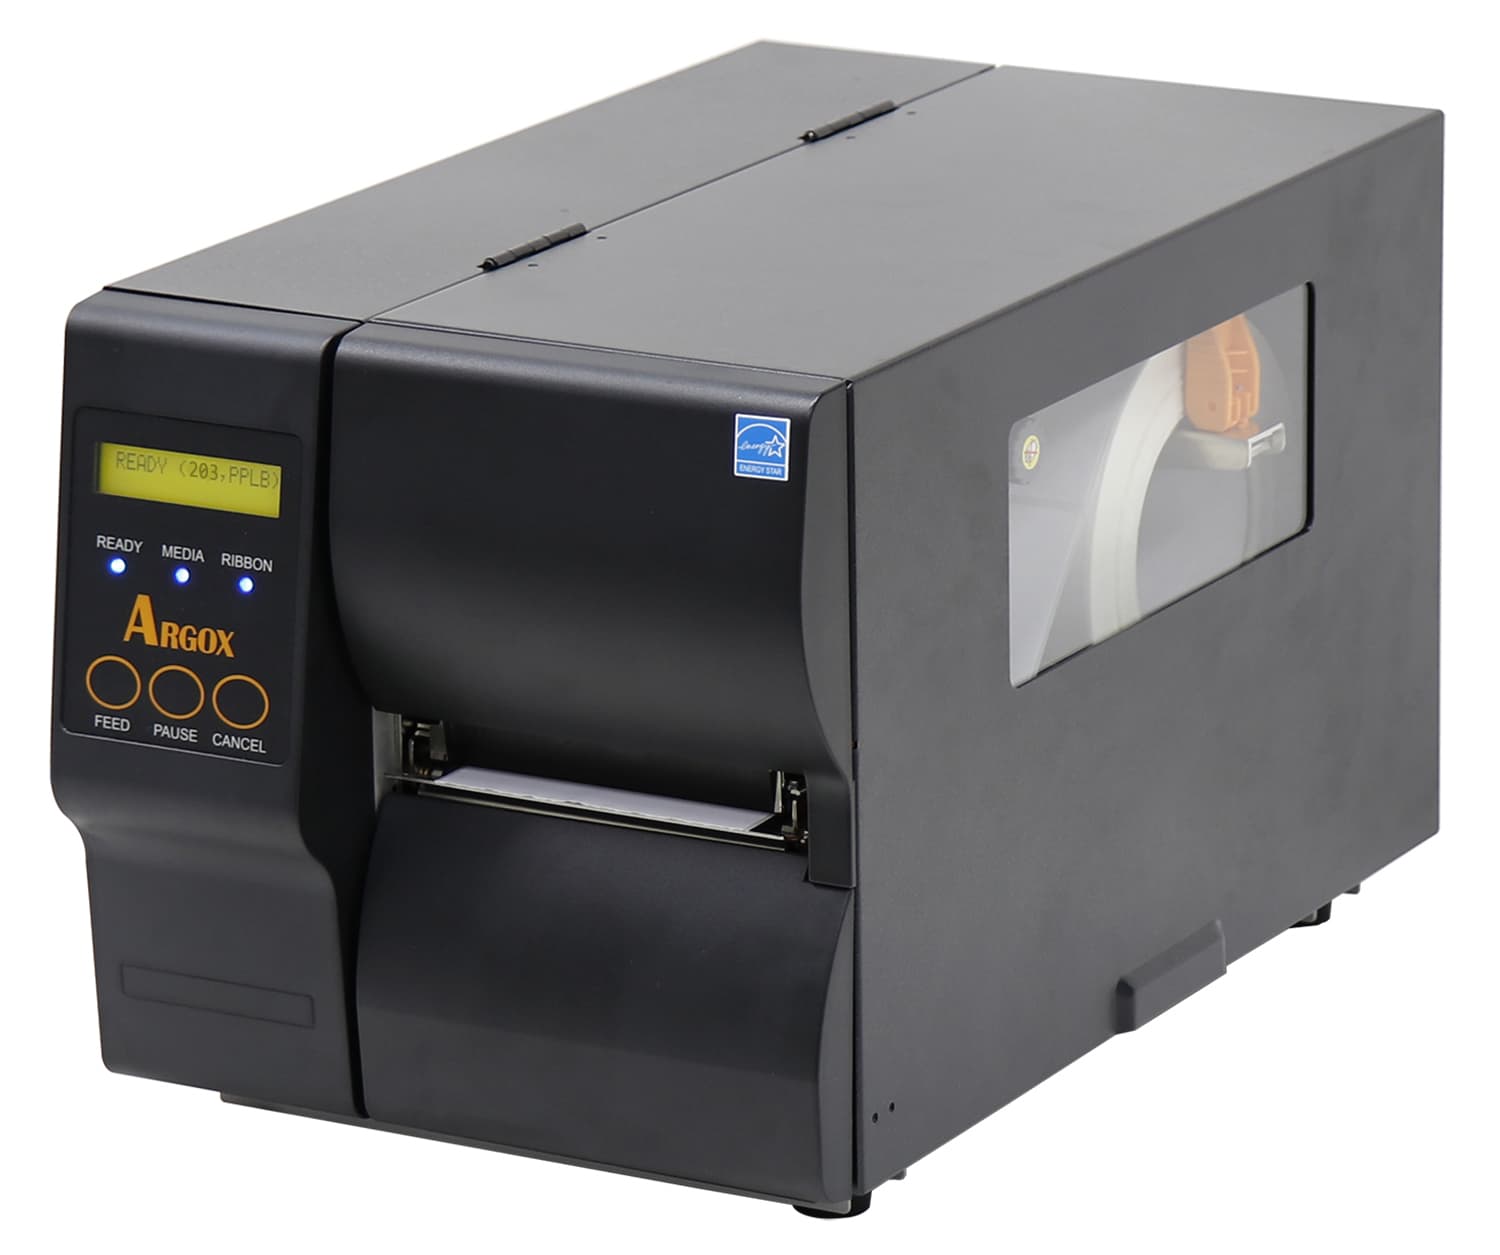 The Argox iX4 label printer is a great industrial printer.